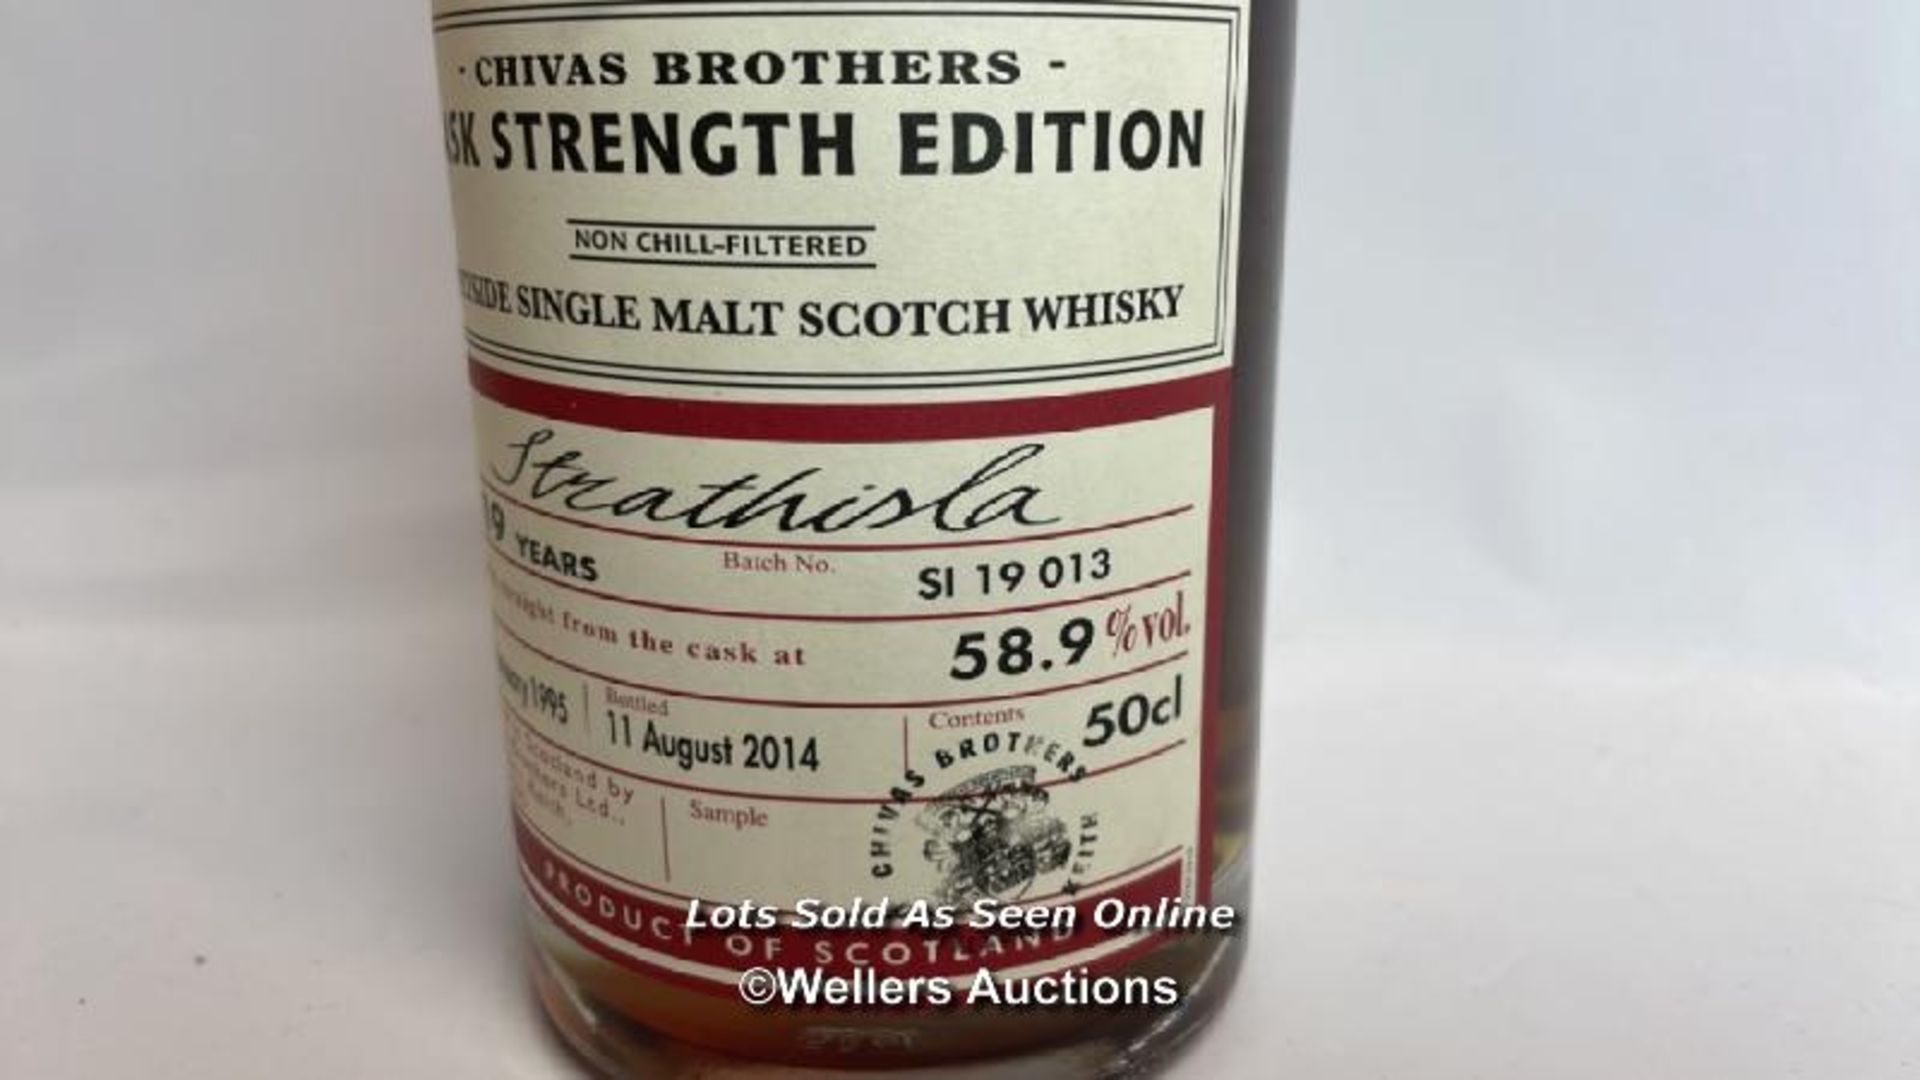 Chivas Brothers Cask Strength Edition Speyside Single Malt Scotch Whisky, Strathisla, Aged 19 Years, - Image 3 of 6